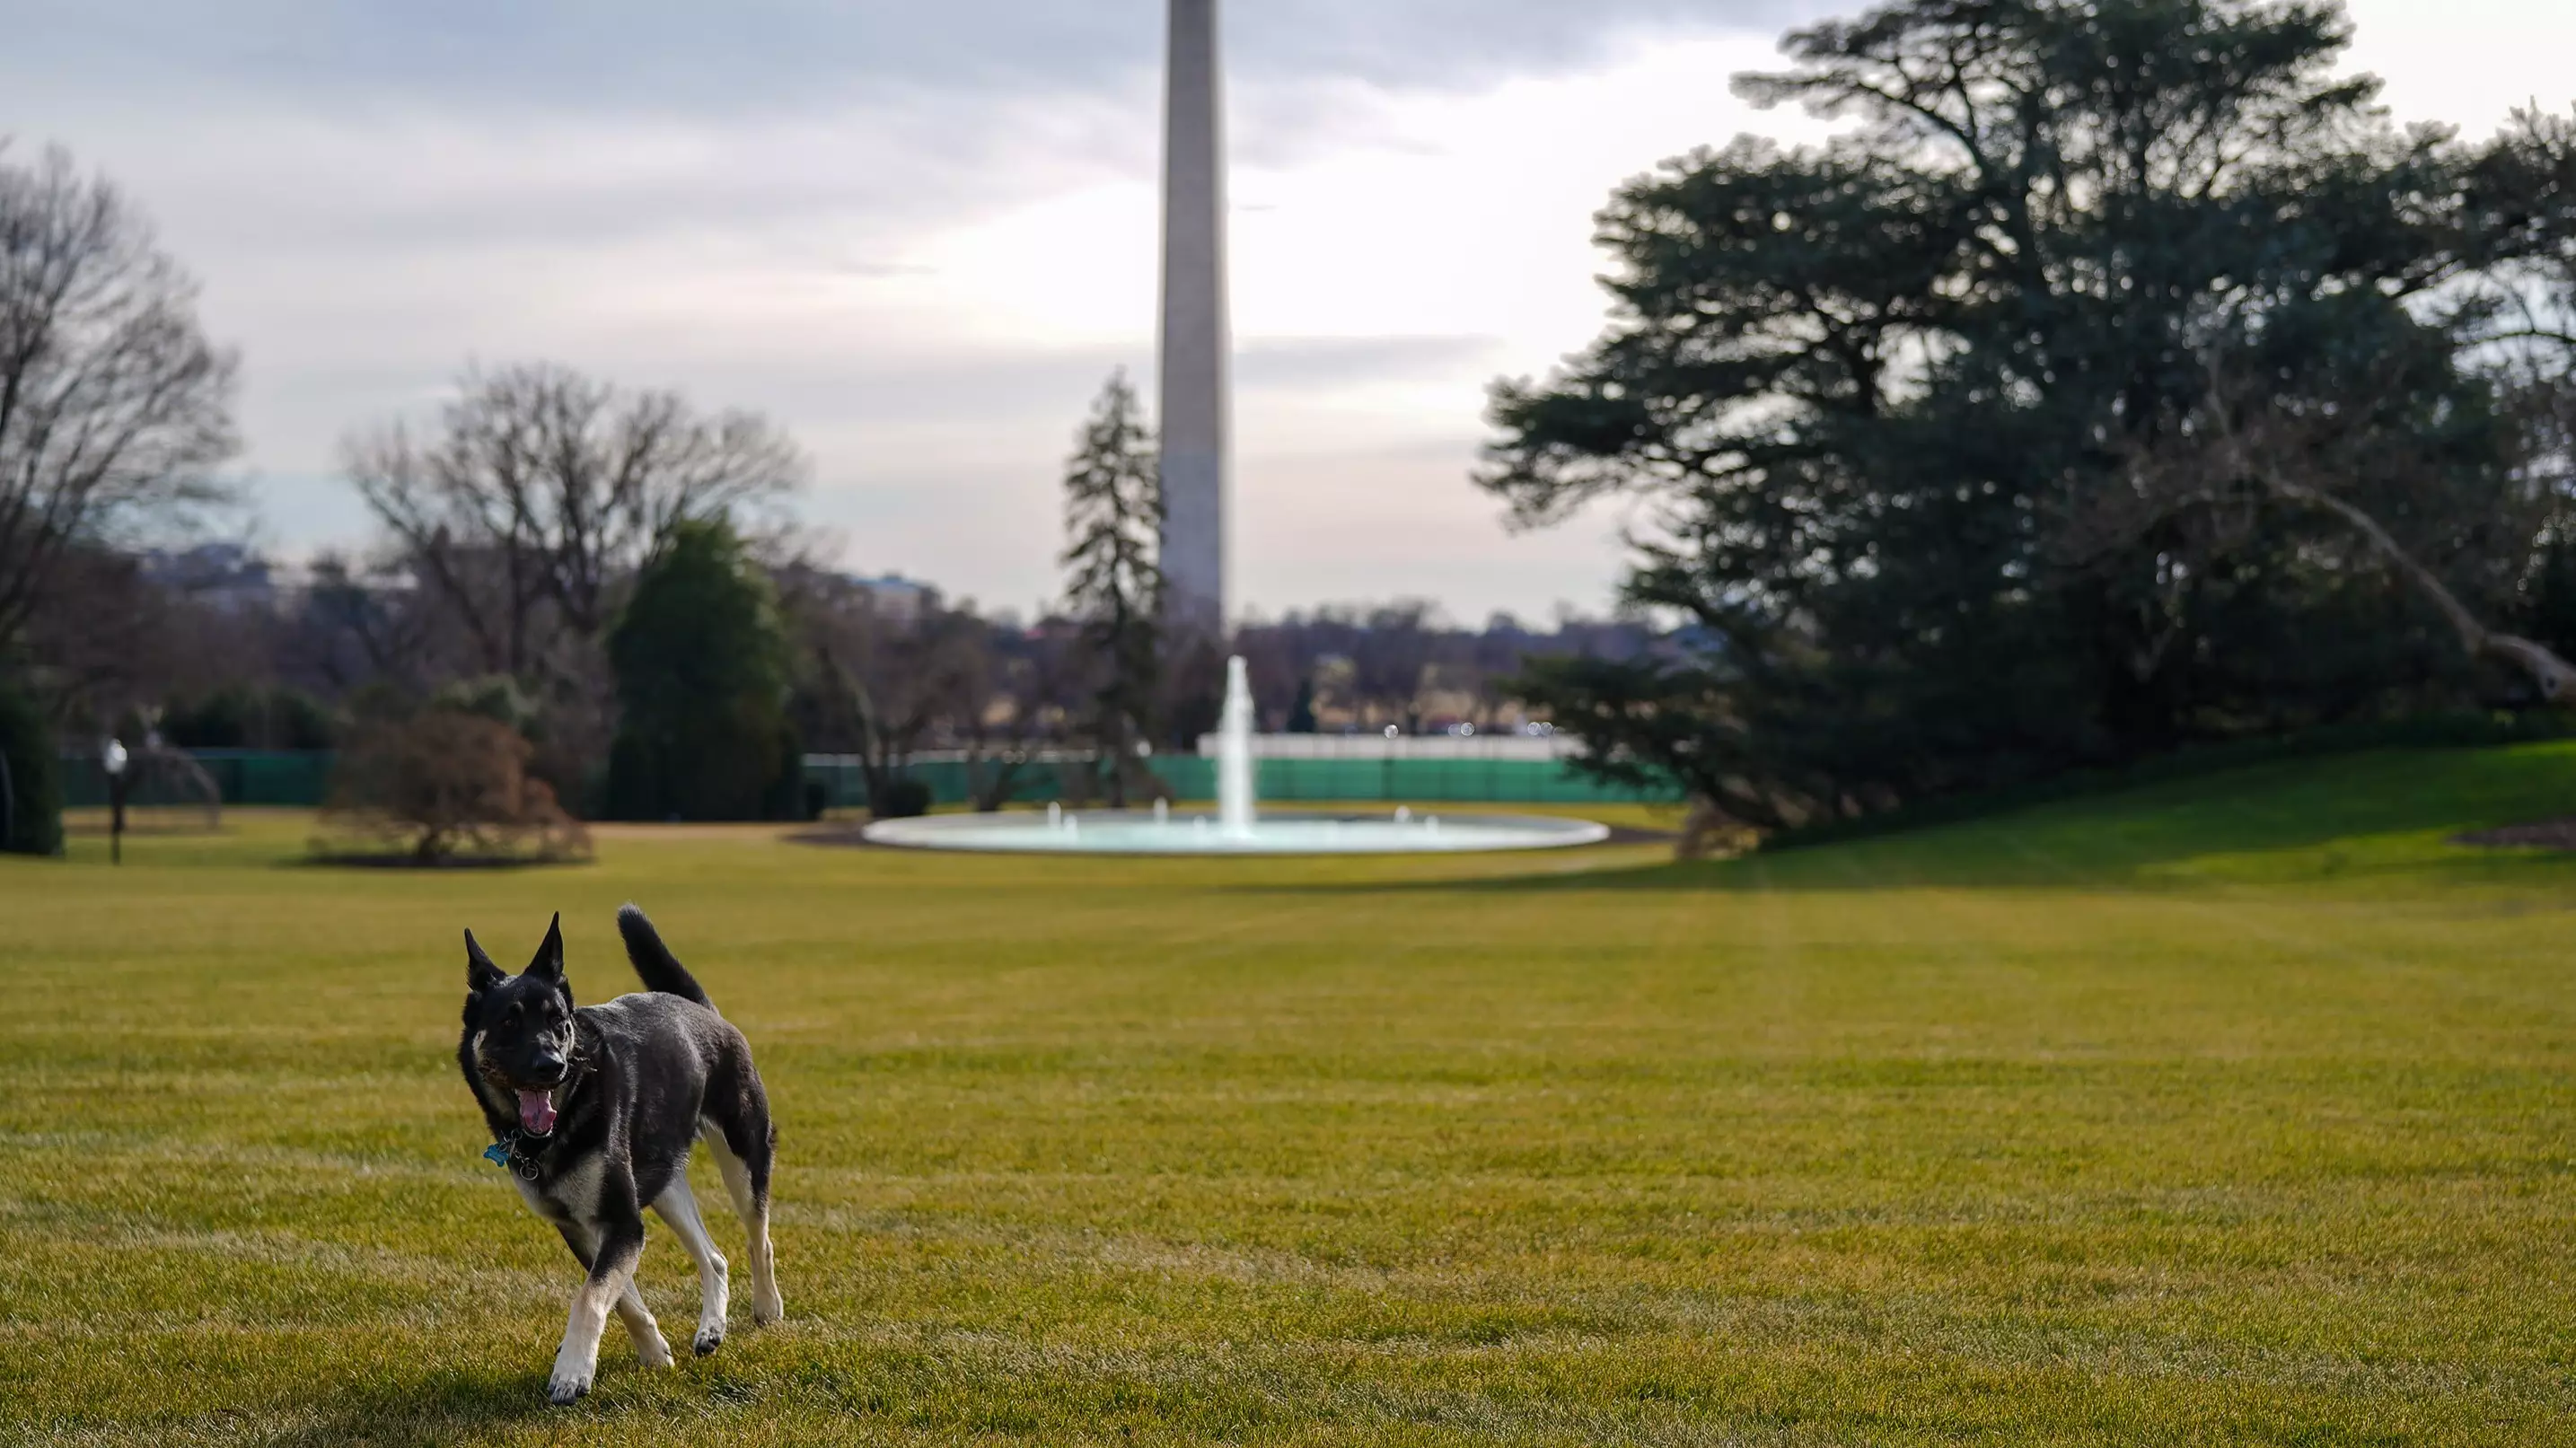 President Biden's Dogs Champ And Major Arrive At White House